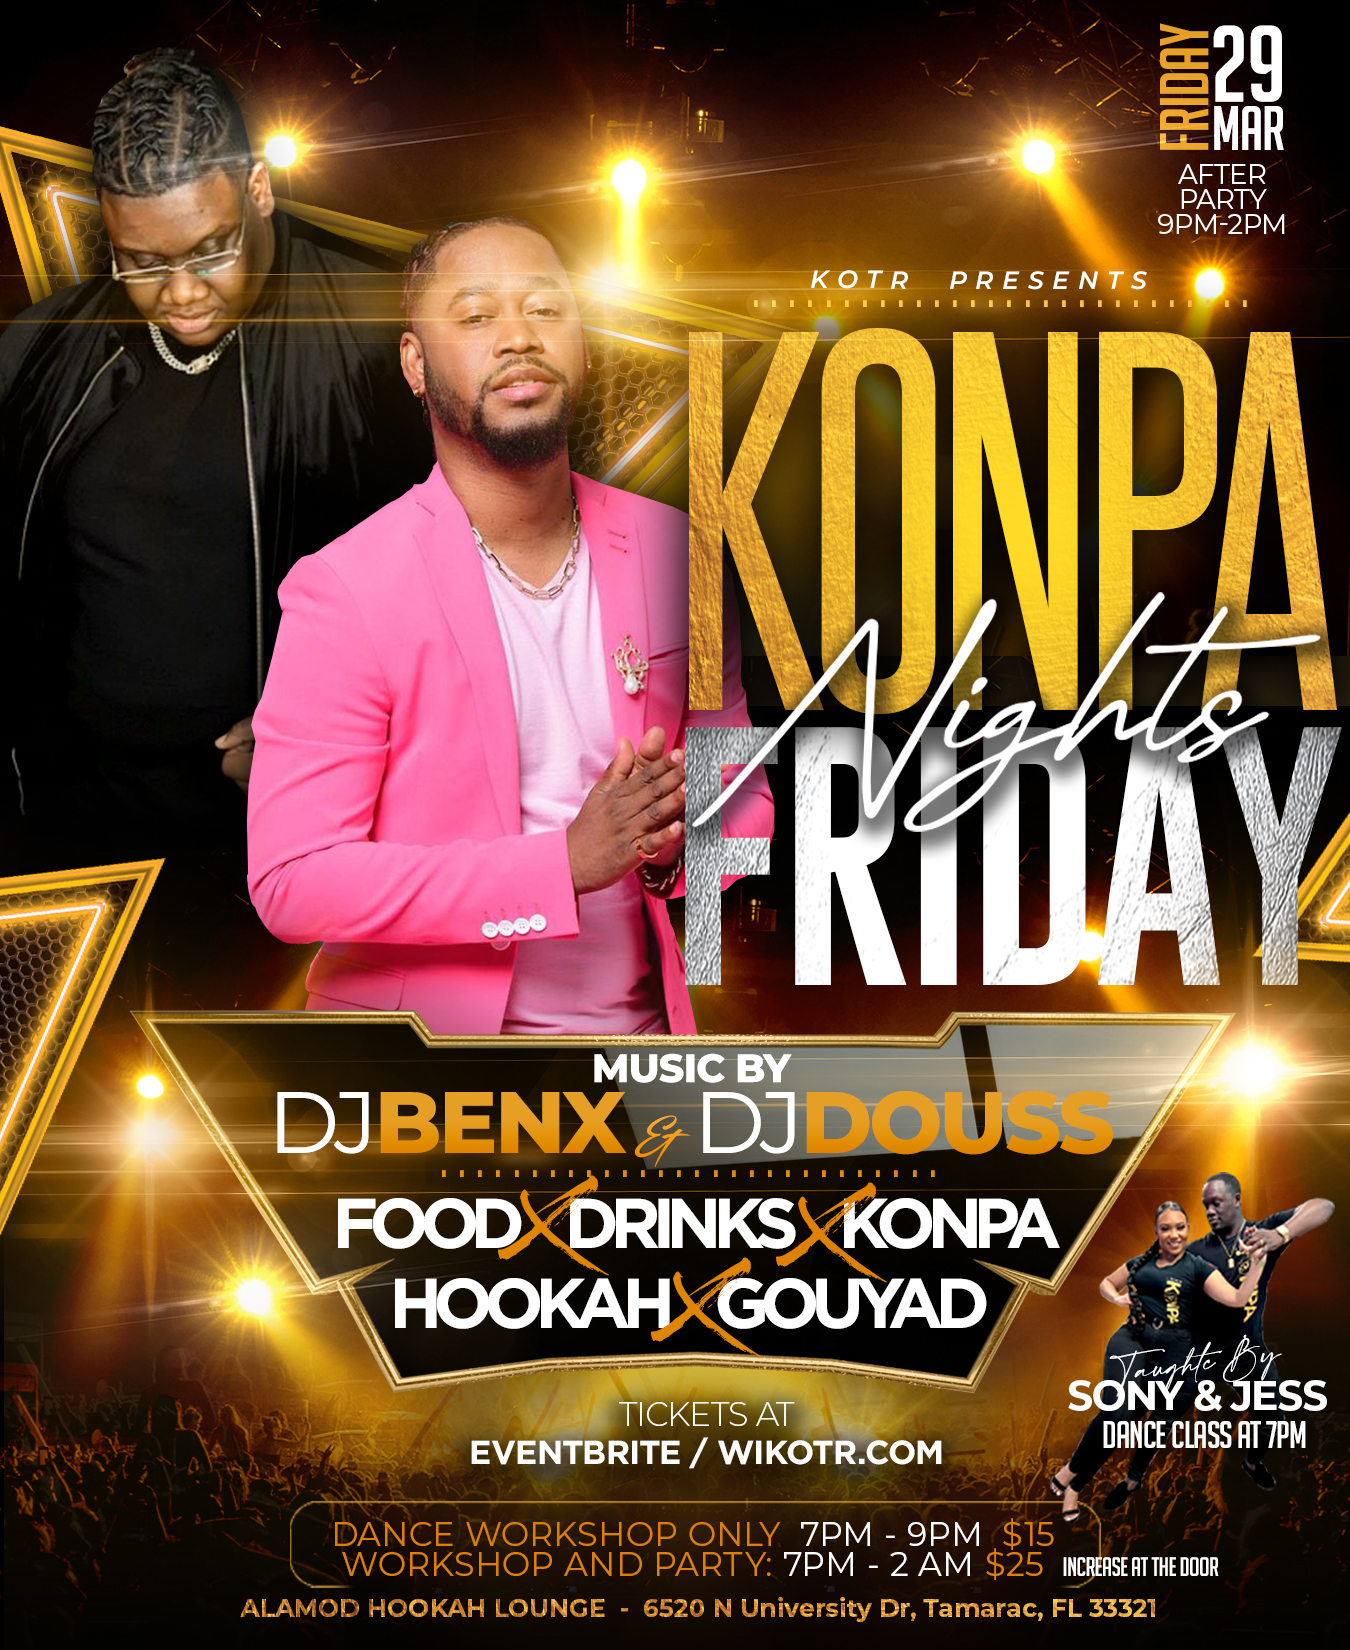 Konpa Fridays in Broward